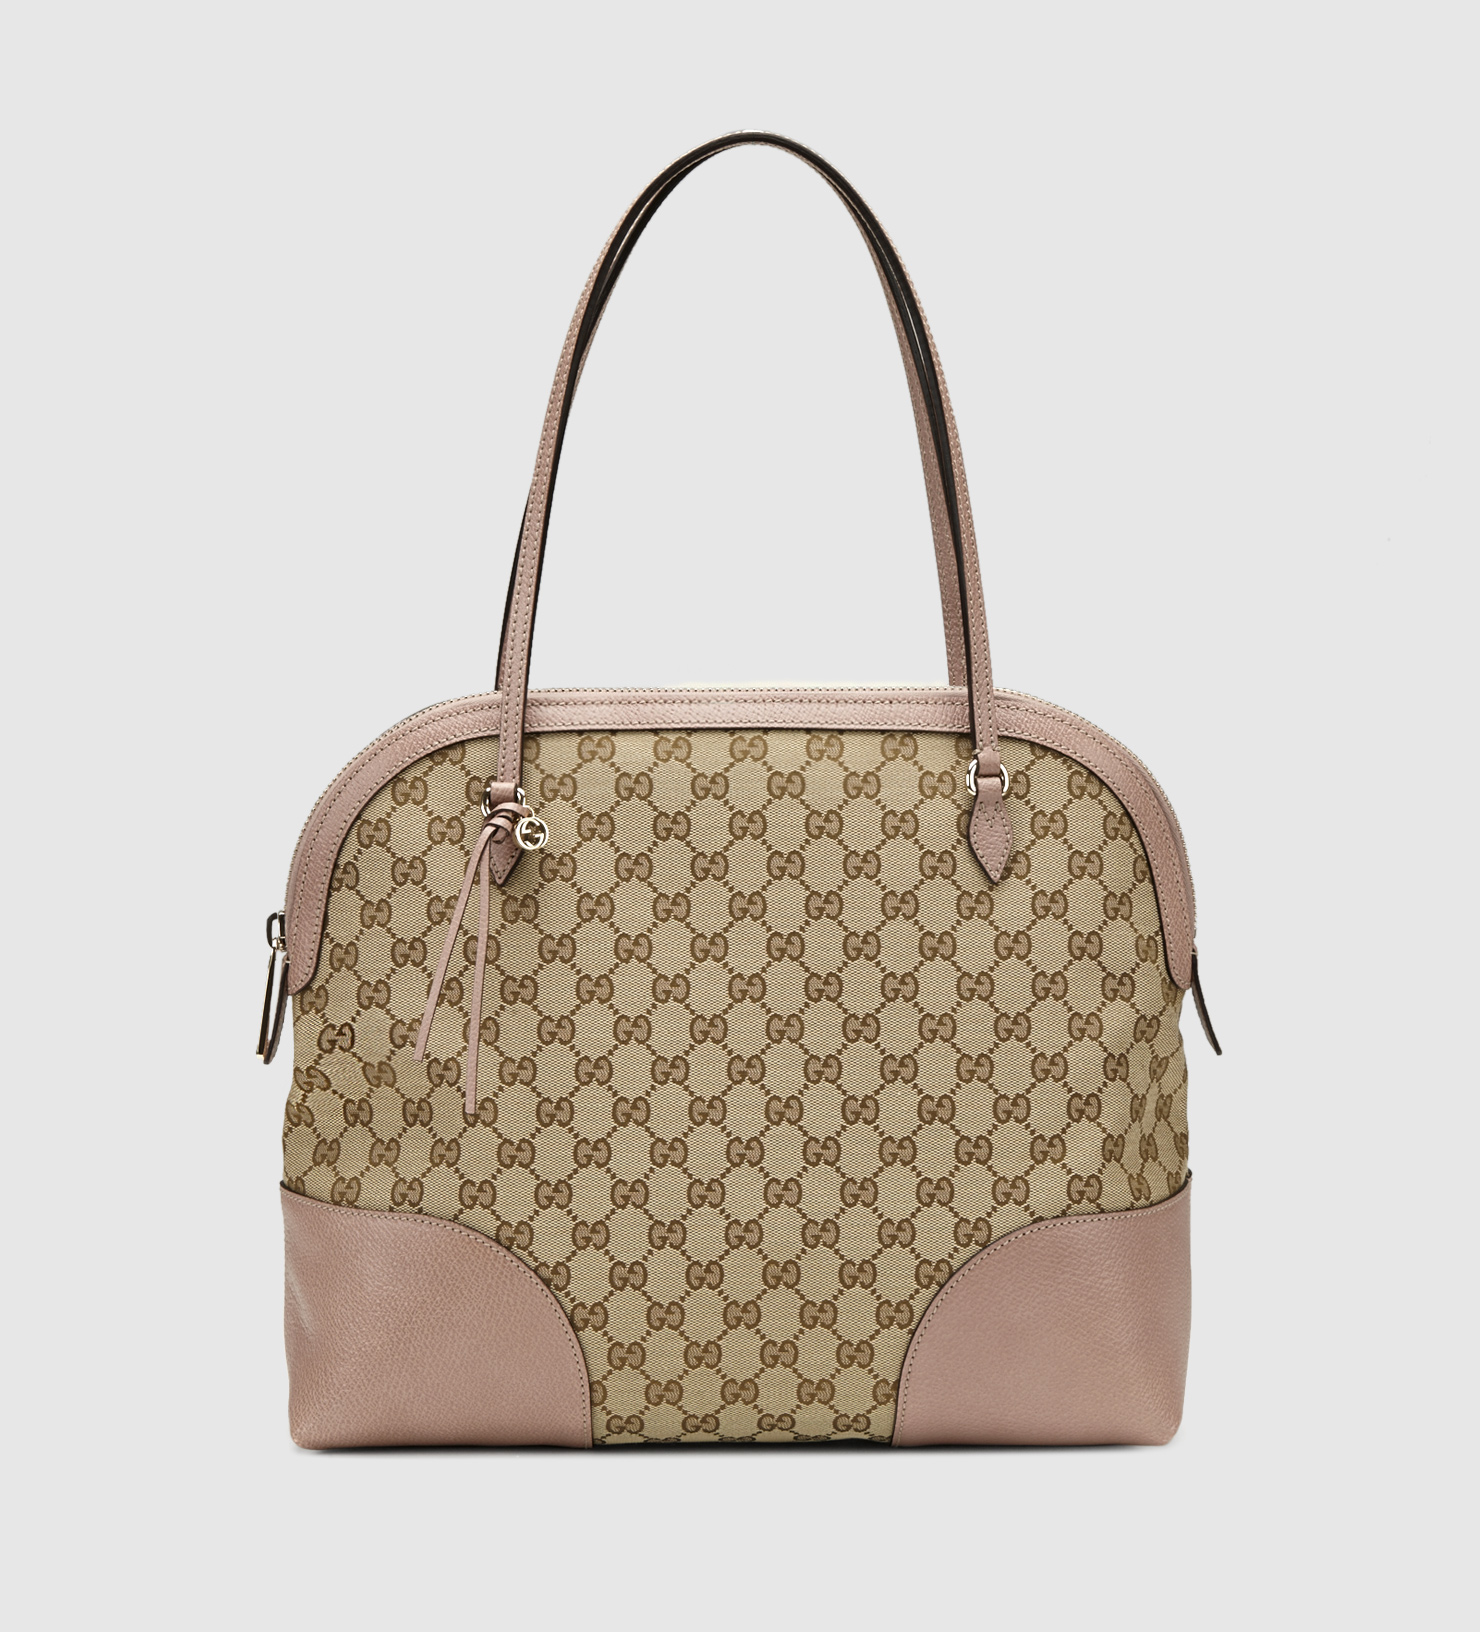 Gucci Bree Original Gg Canvas Shoulder Bag in Natural - Lyst